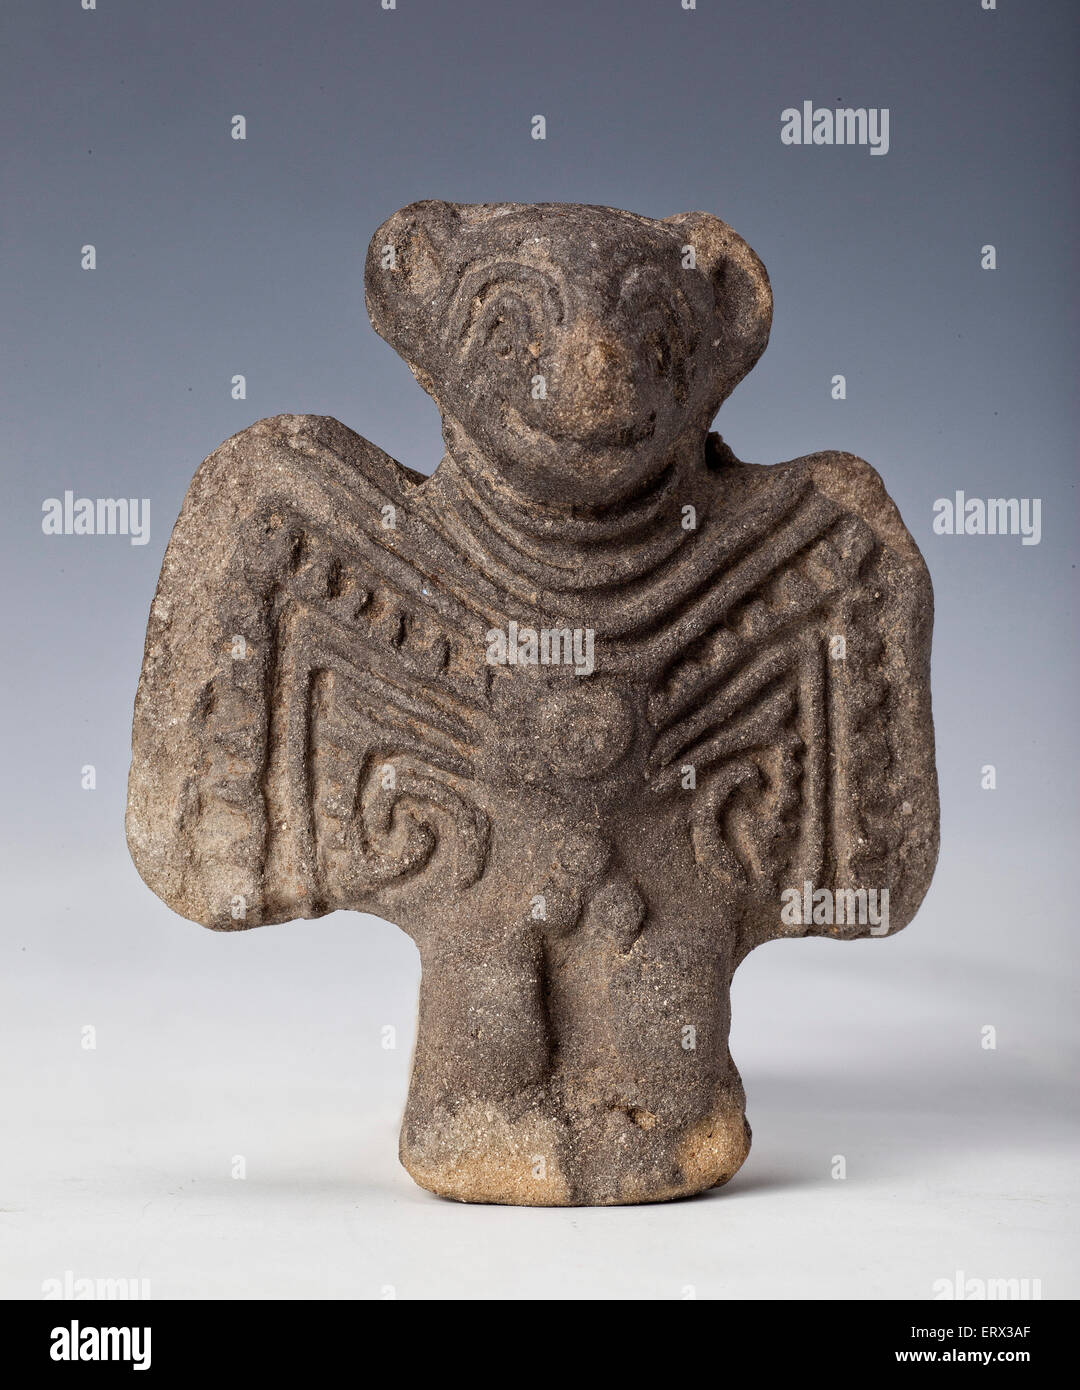 Figura antropomorfa en argil o arcilla, antiguo arte de Ecuador Foto de stock